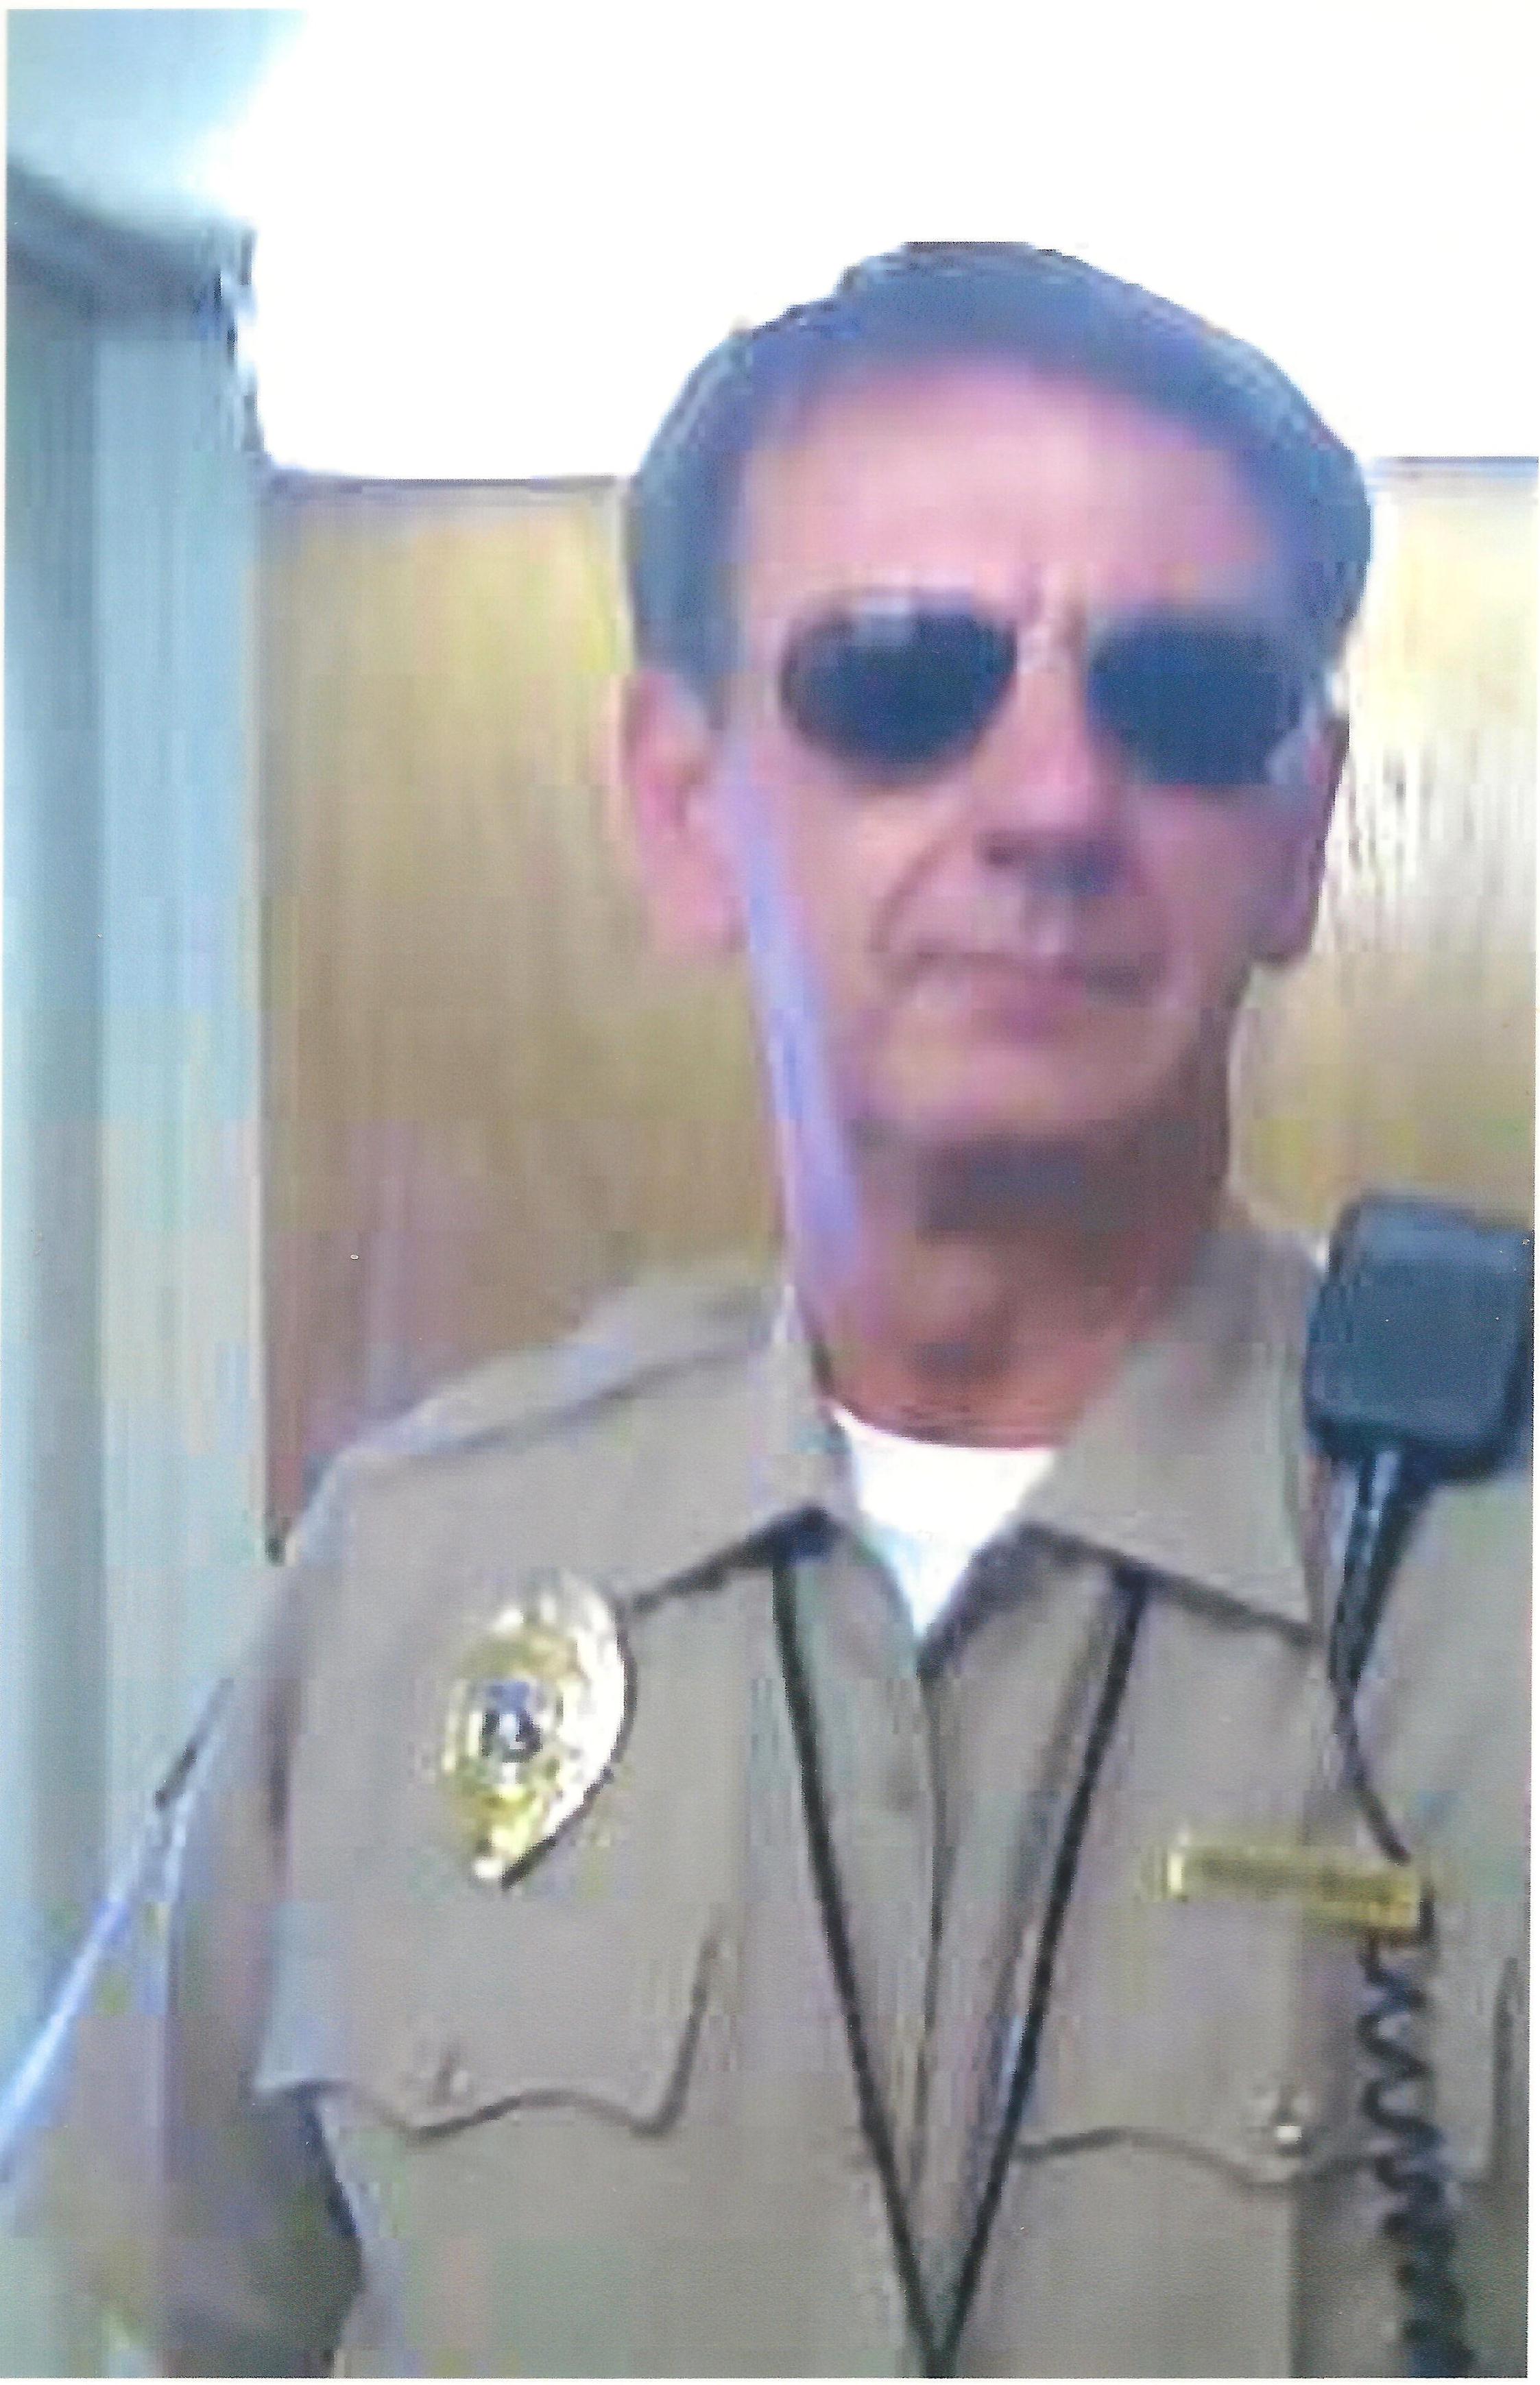 Still photo of Gus Rhodes as a Las Vegas Law Enforcement Officer.